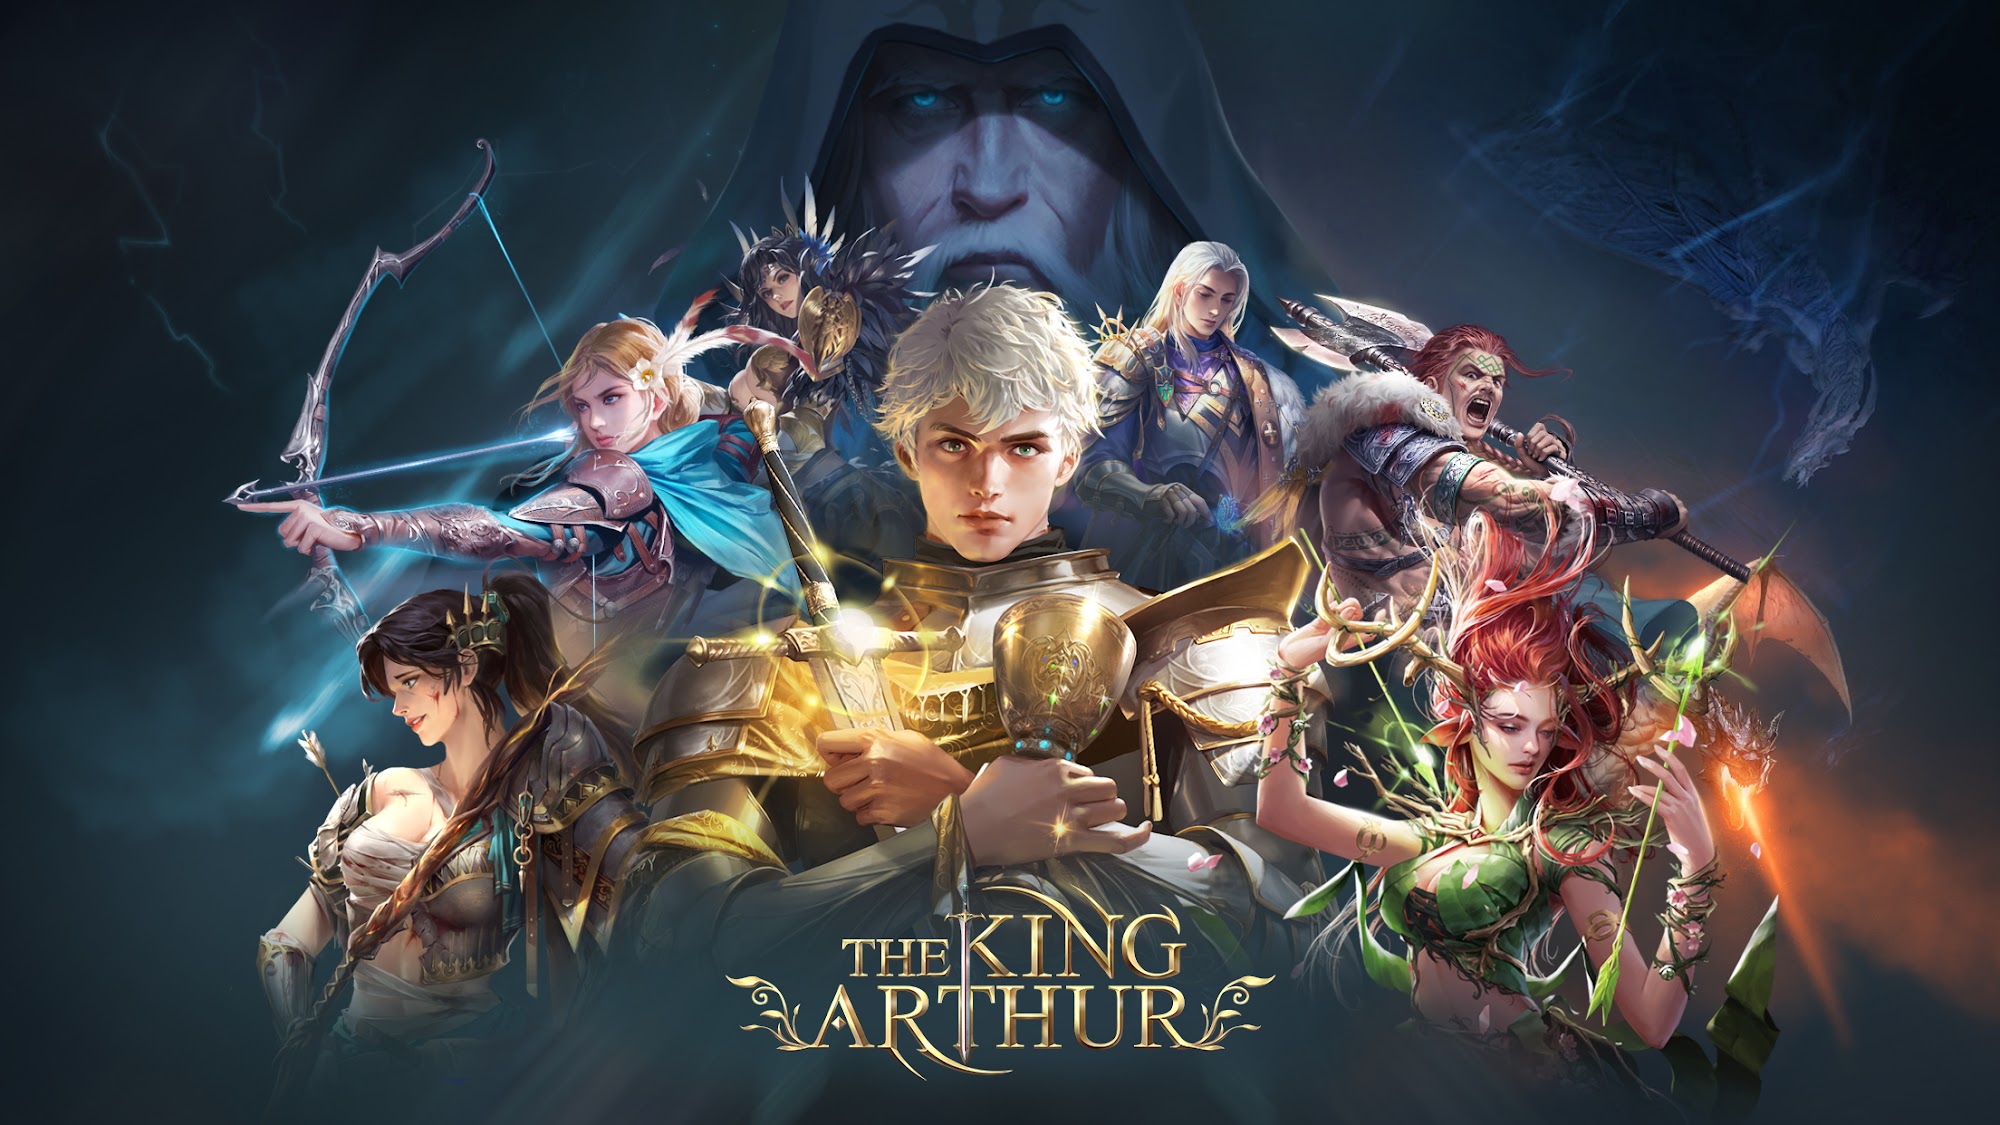 Download The King Arthur für Android kostenlos.